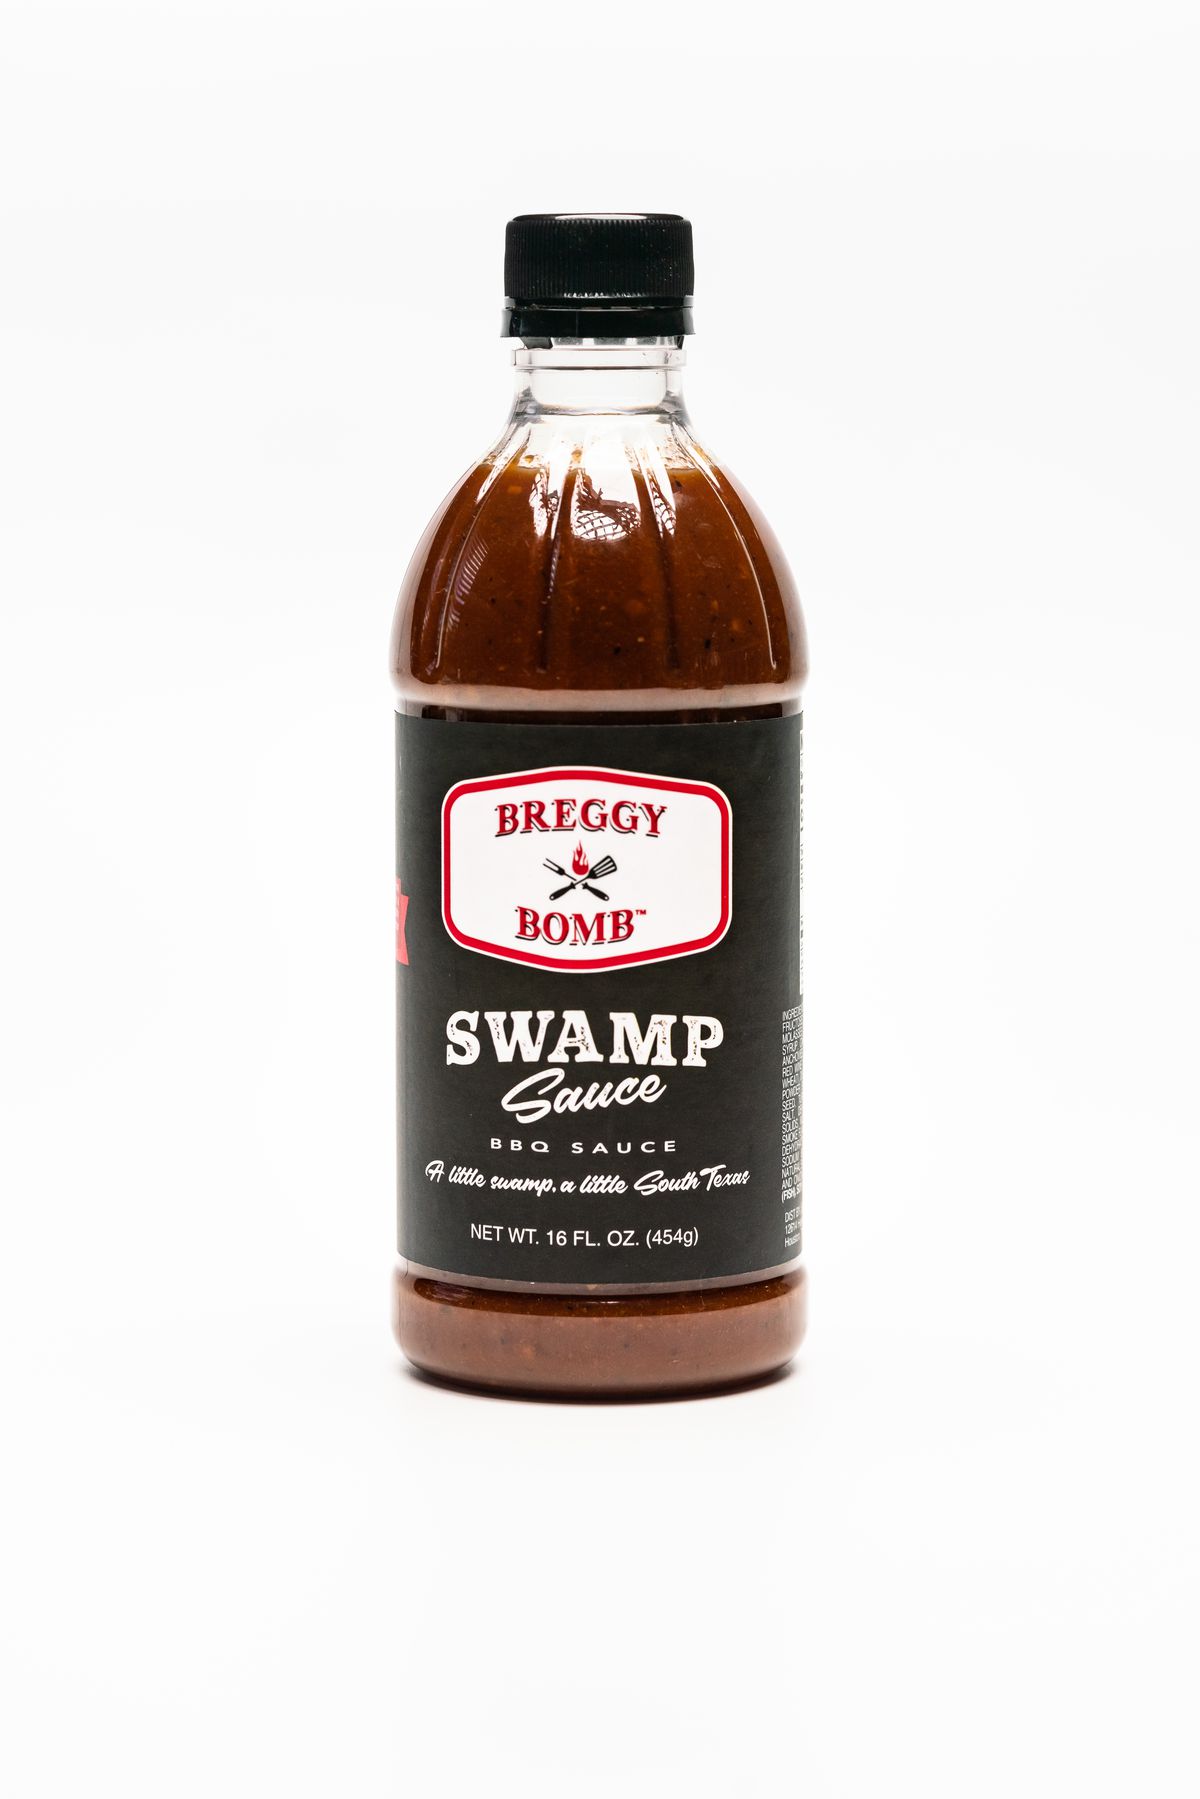 A bottle of Breggy Bomb’s Swamp Sauce.